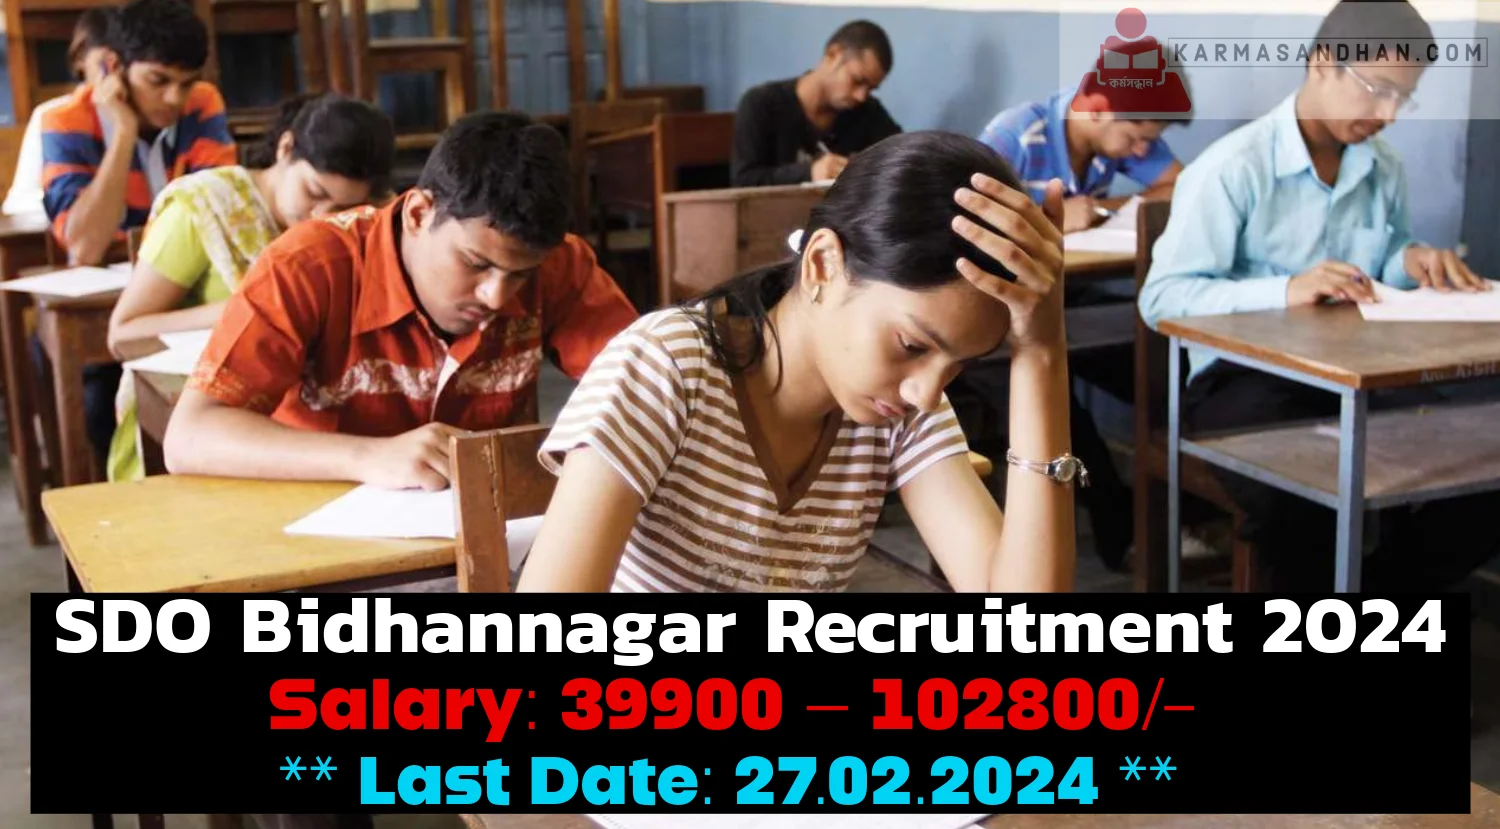 SDO Bidhannagar Recruitment 2024 Notification Out, Apply Now